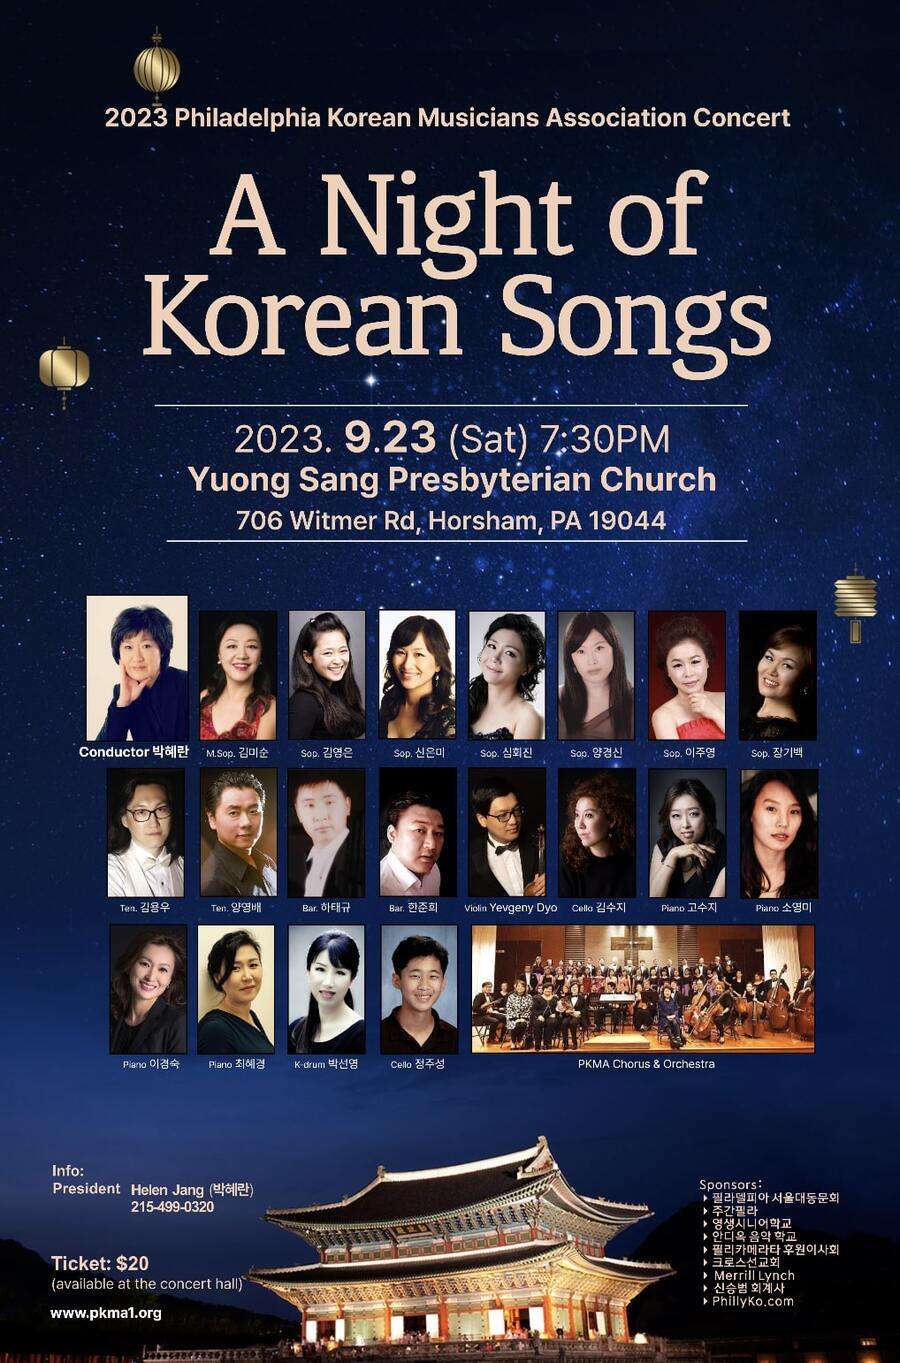 2023 Philadelphia Korean Musicians Association Concert at Yuong Sang Presbyterian Church